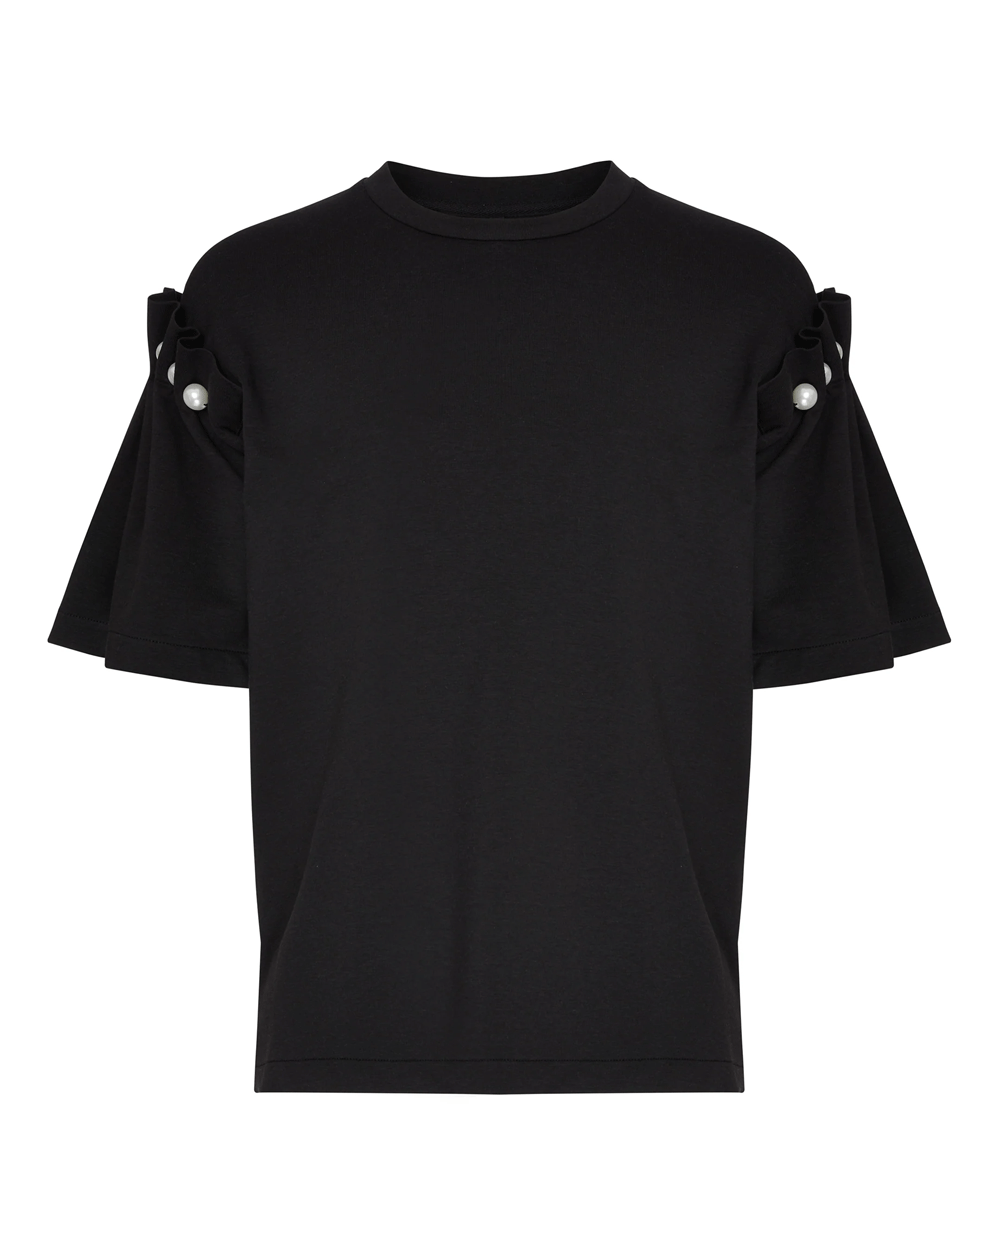 Black Amber T Shirt